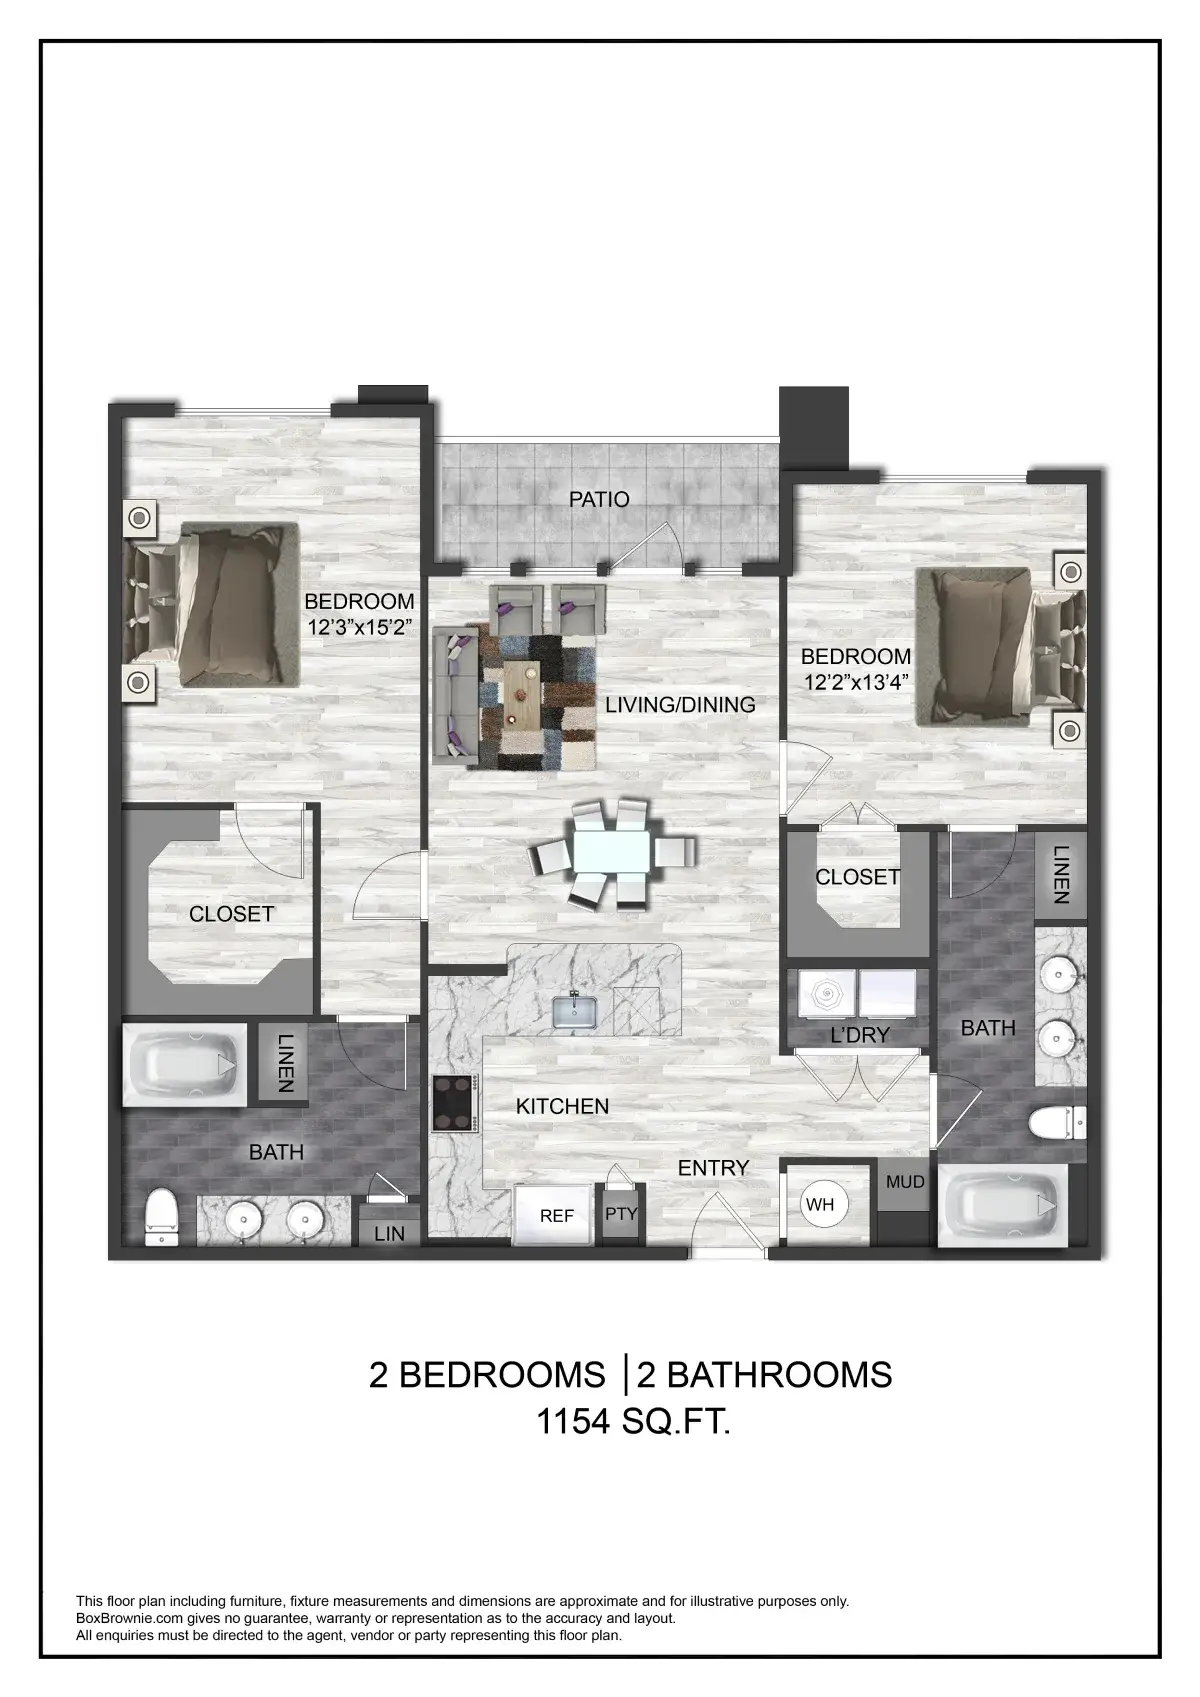 Sinclair houston apartment floorplan 8